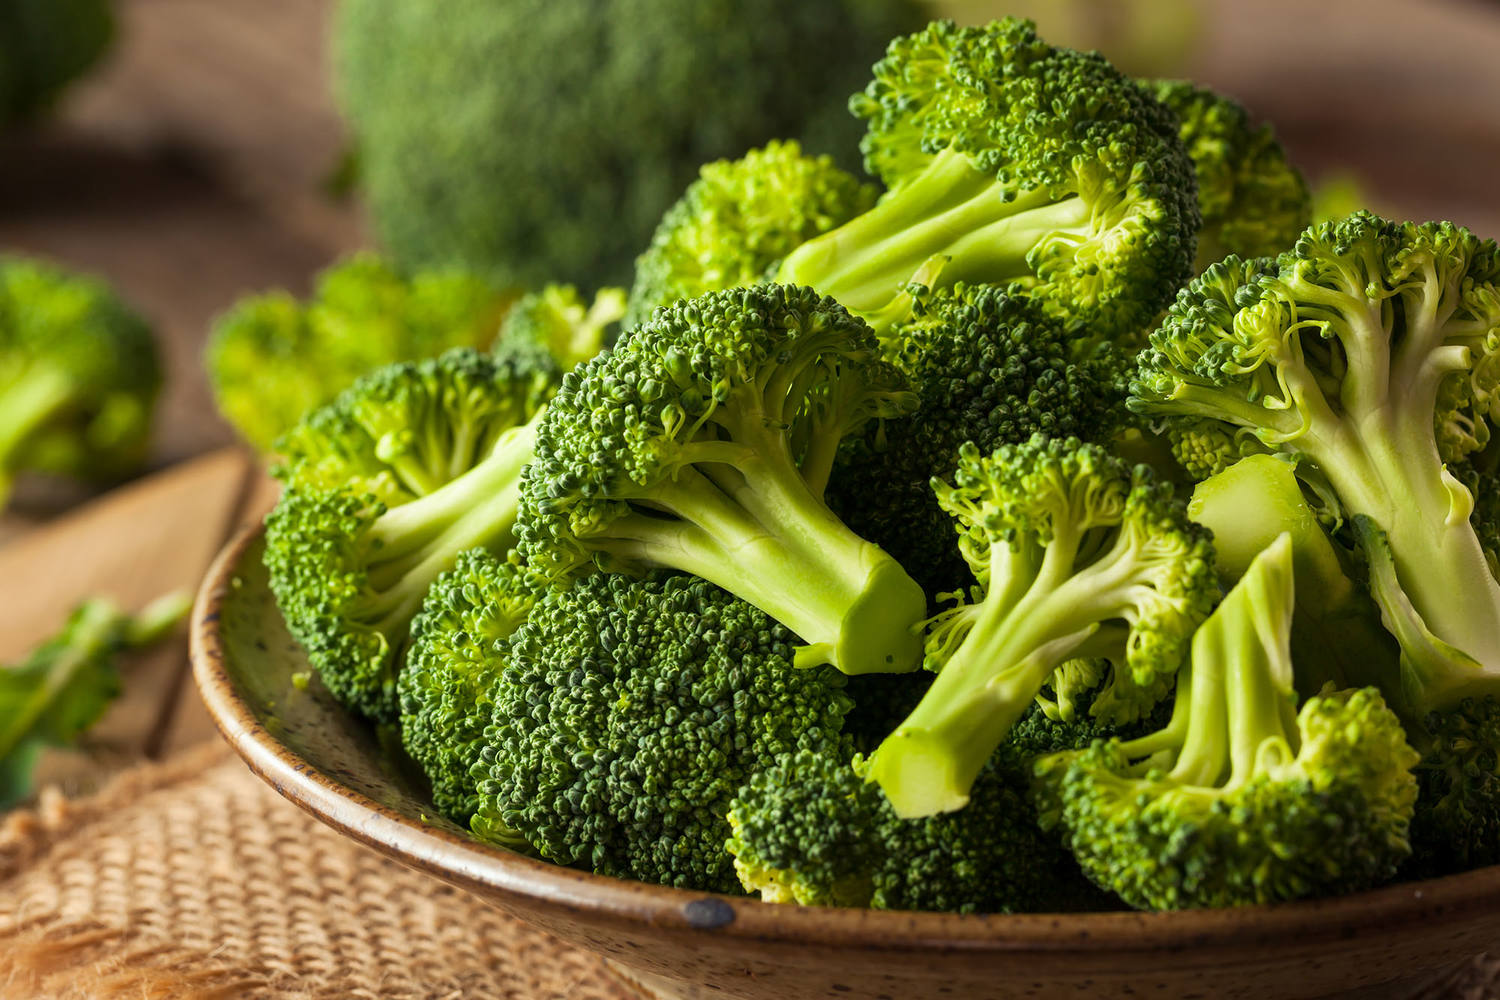 Broccoli roosjes 15-30mm 2,5kg kist 2 stuks 2